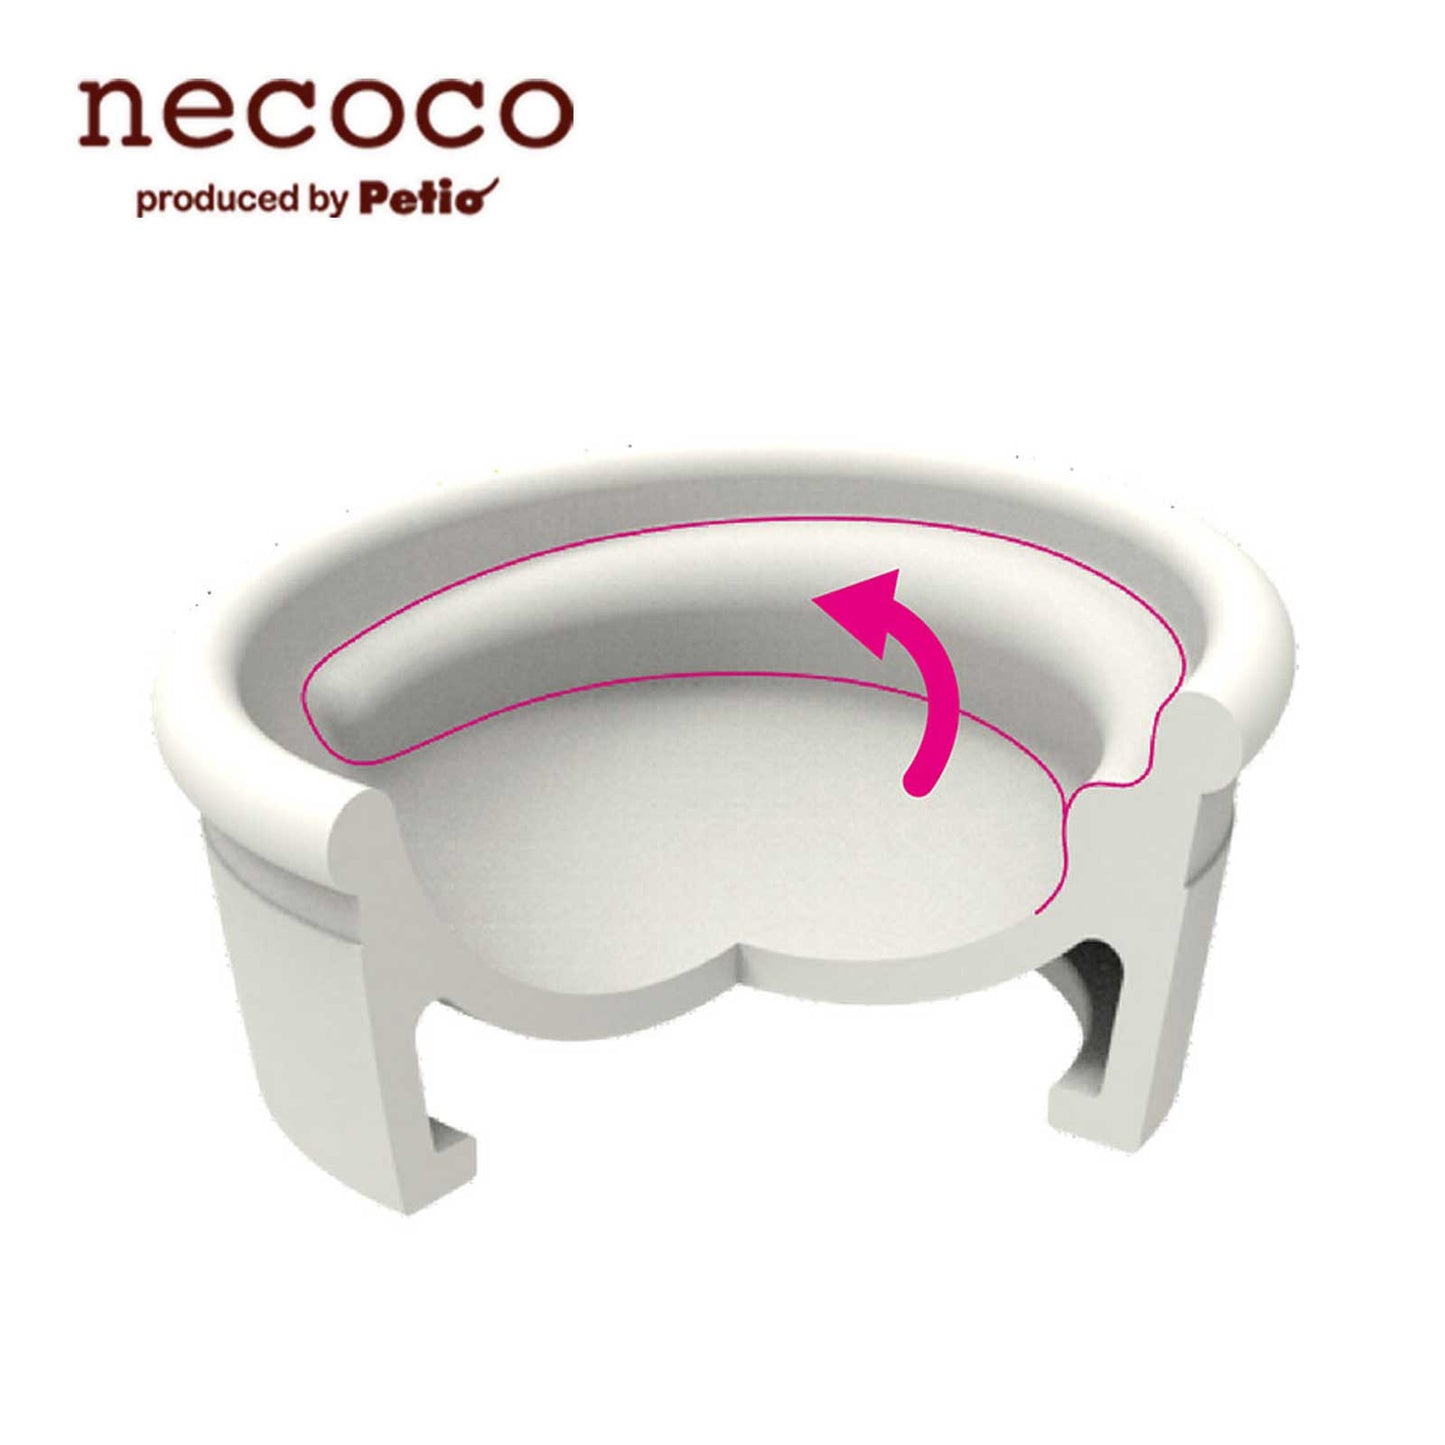 Petio Necoco Wood Grain Ceramic Cat Inclined Feeding Bowl - Wet Food